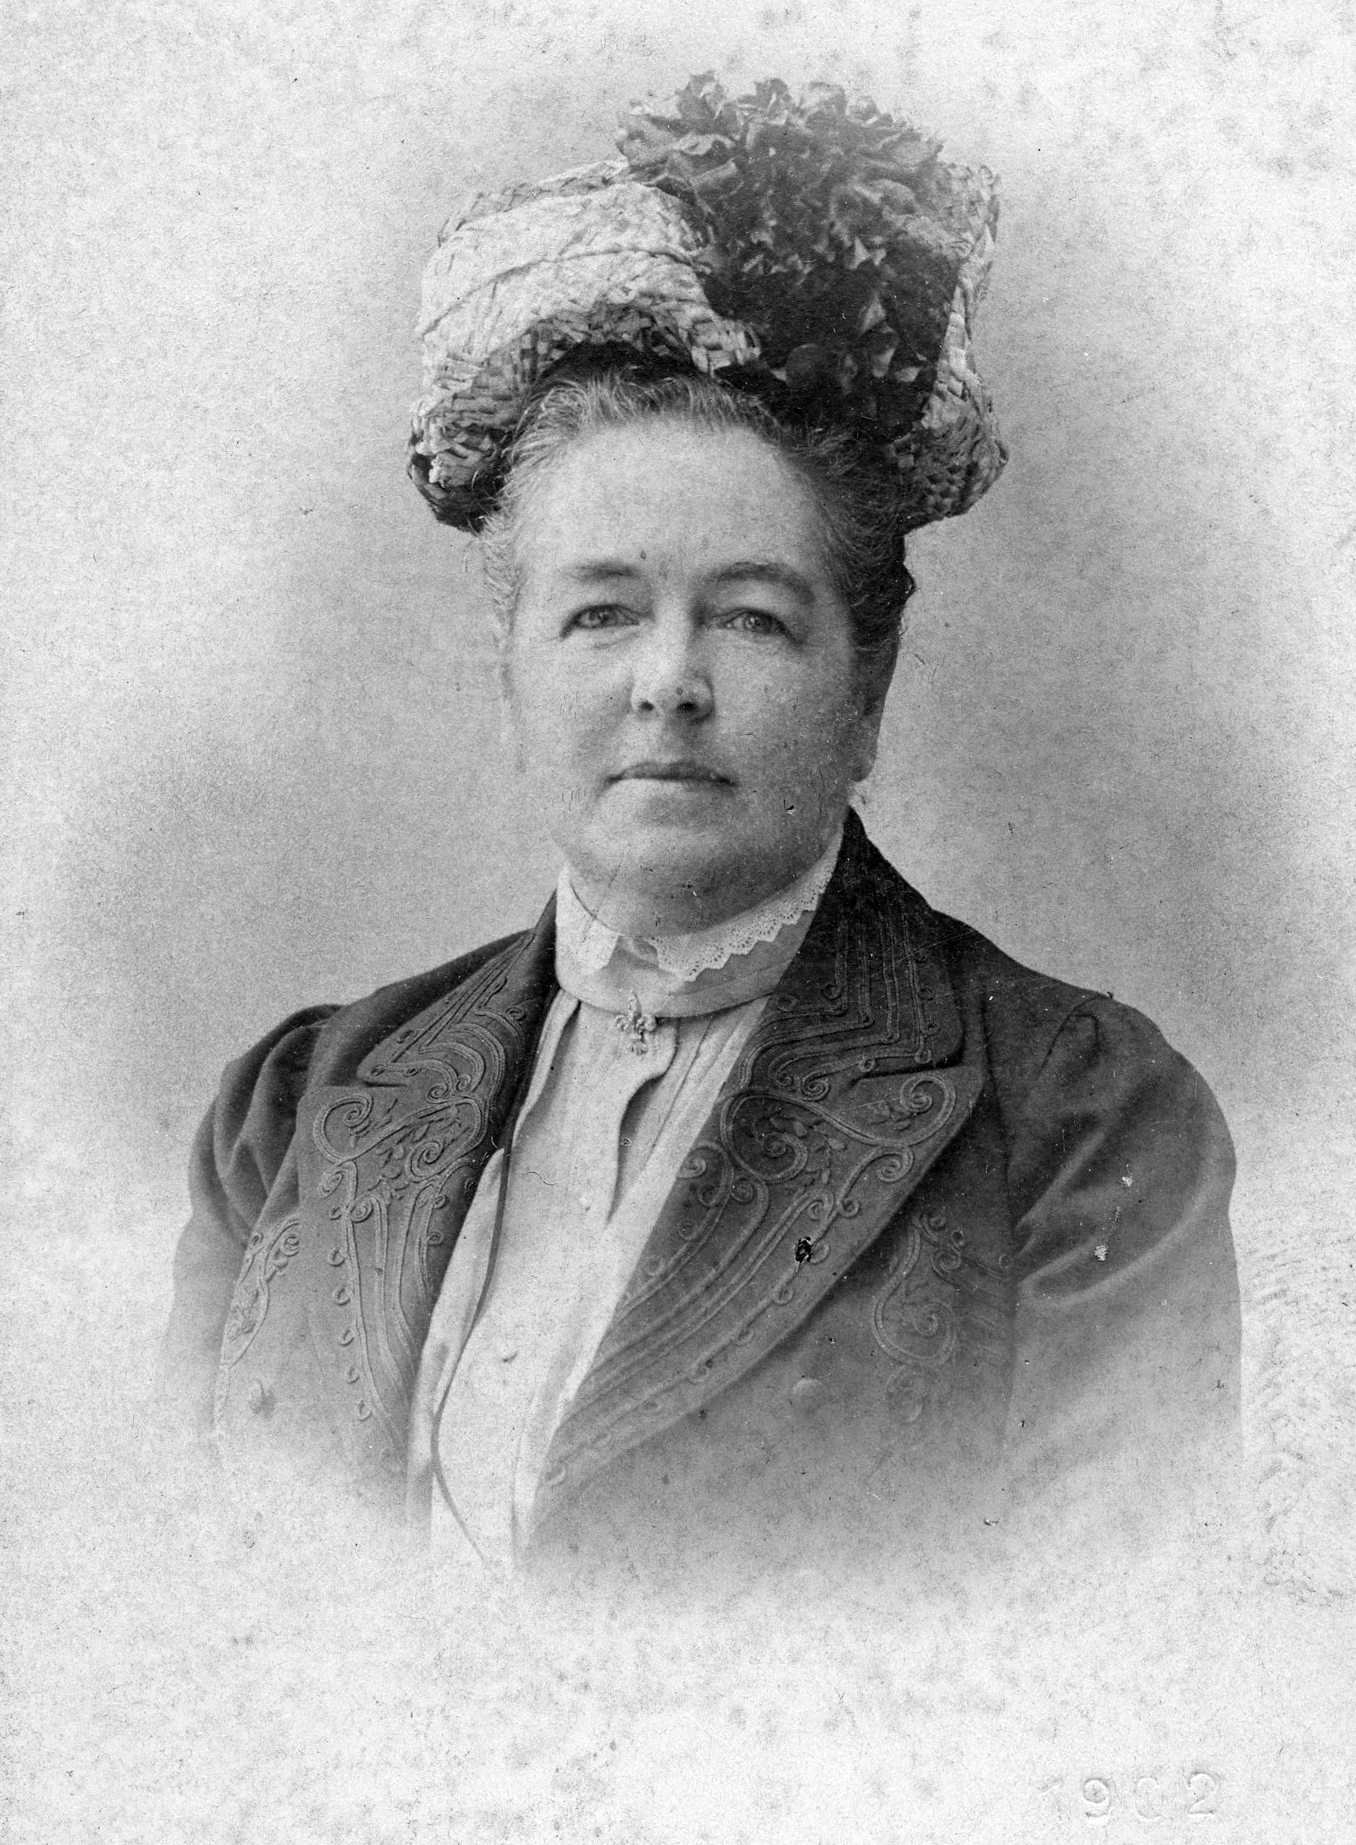 Tirzah Snell Emerson (18-Apr-1846 - 11-Oct-1922)